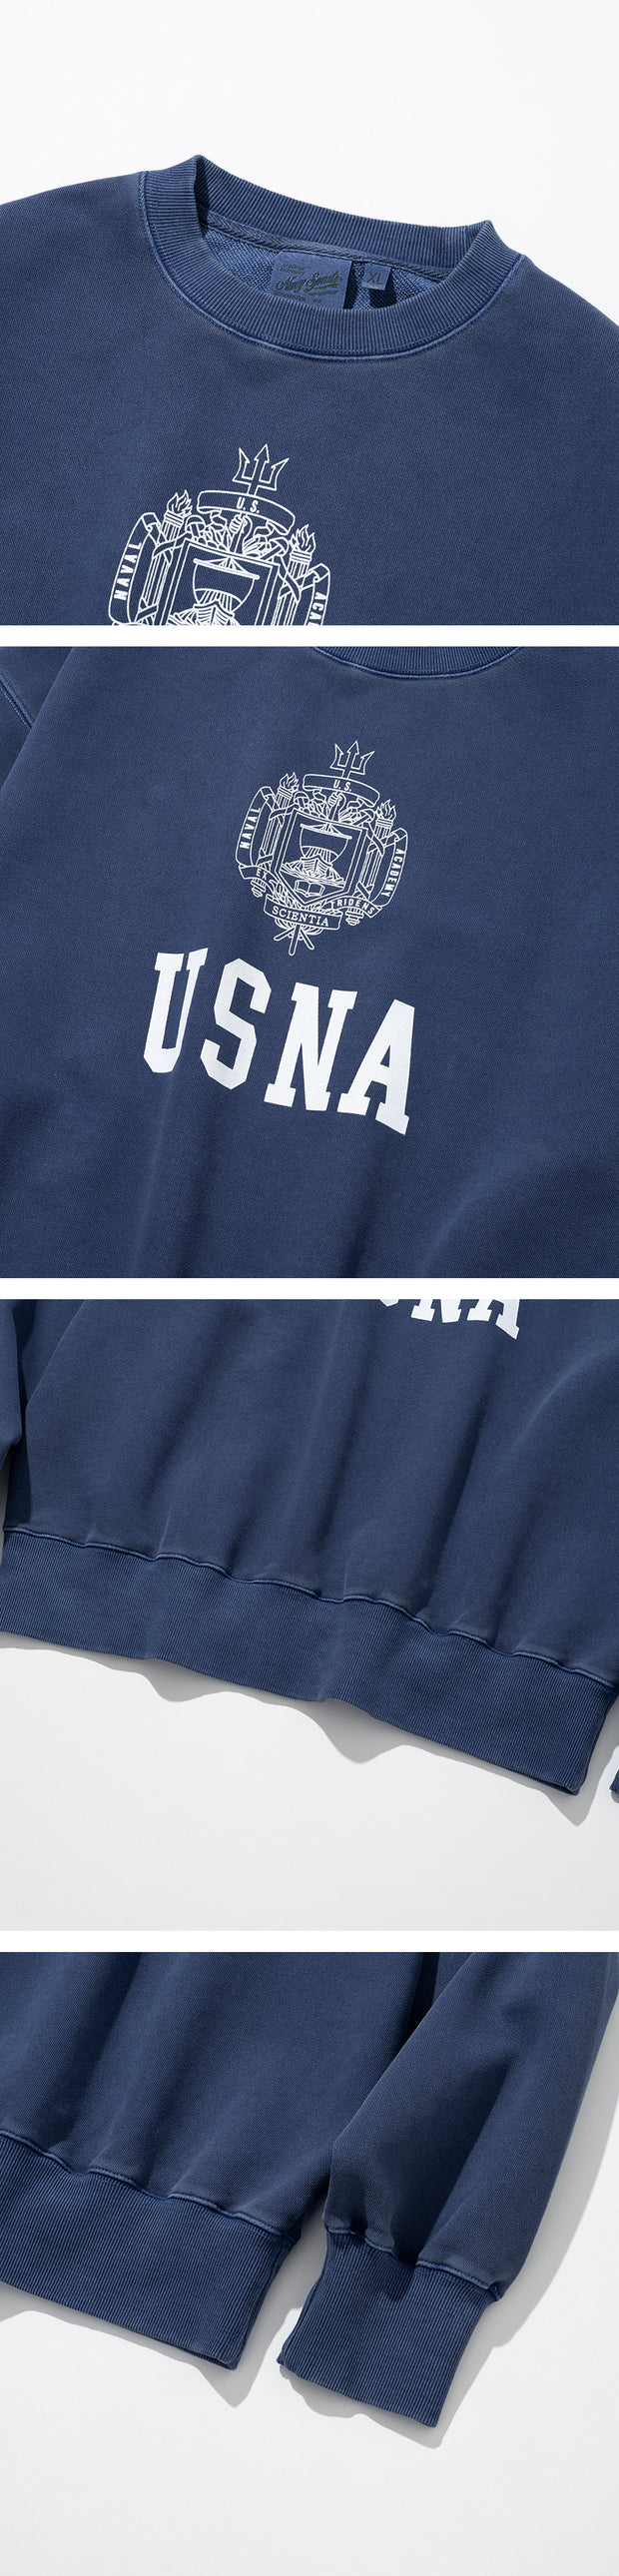 Unsa Sweatshirt - Pigment Navy